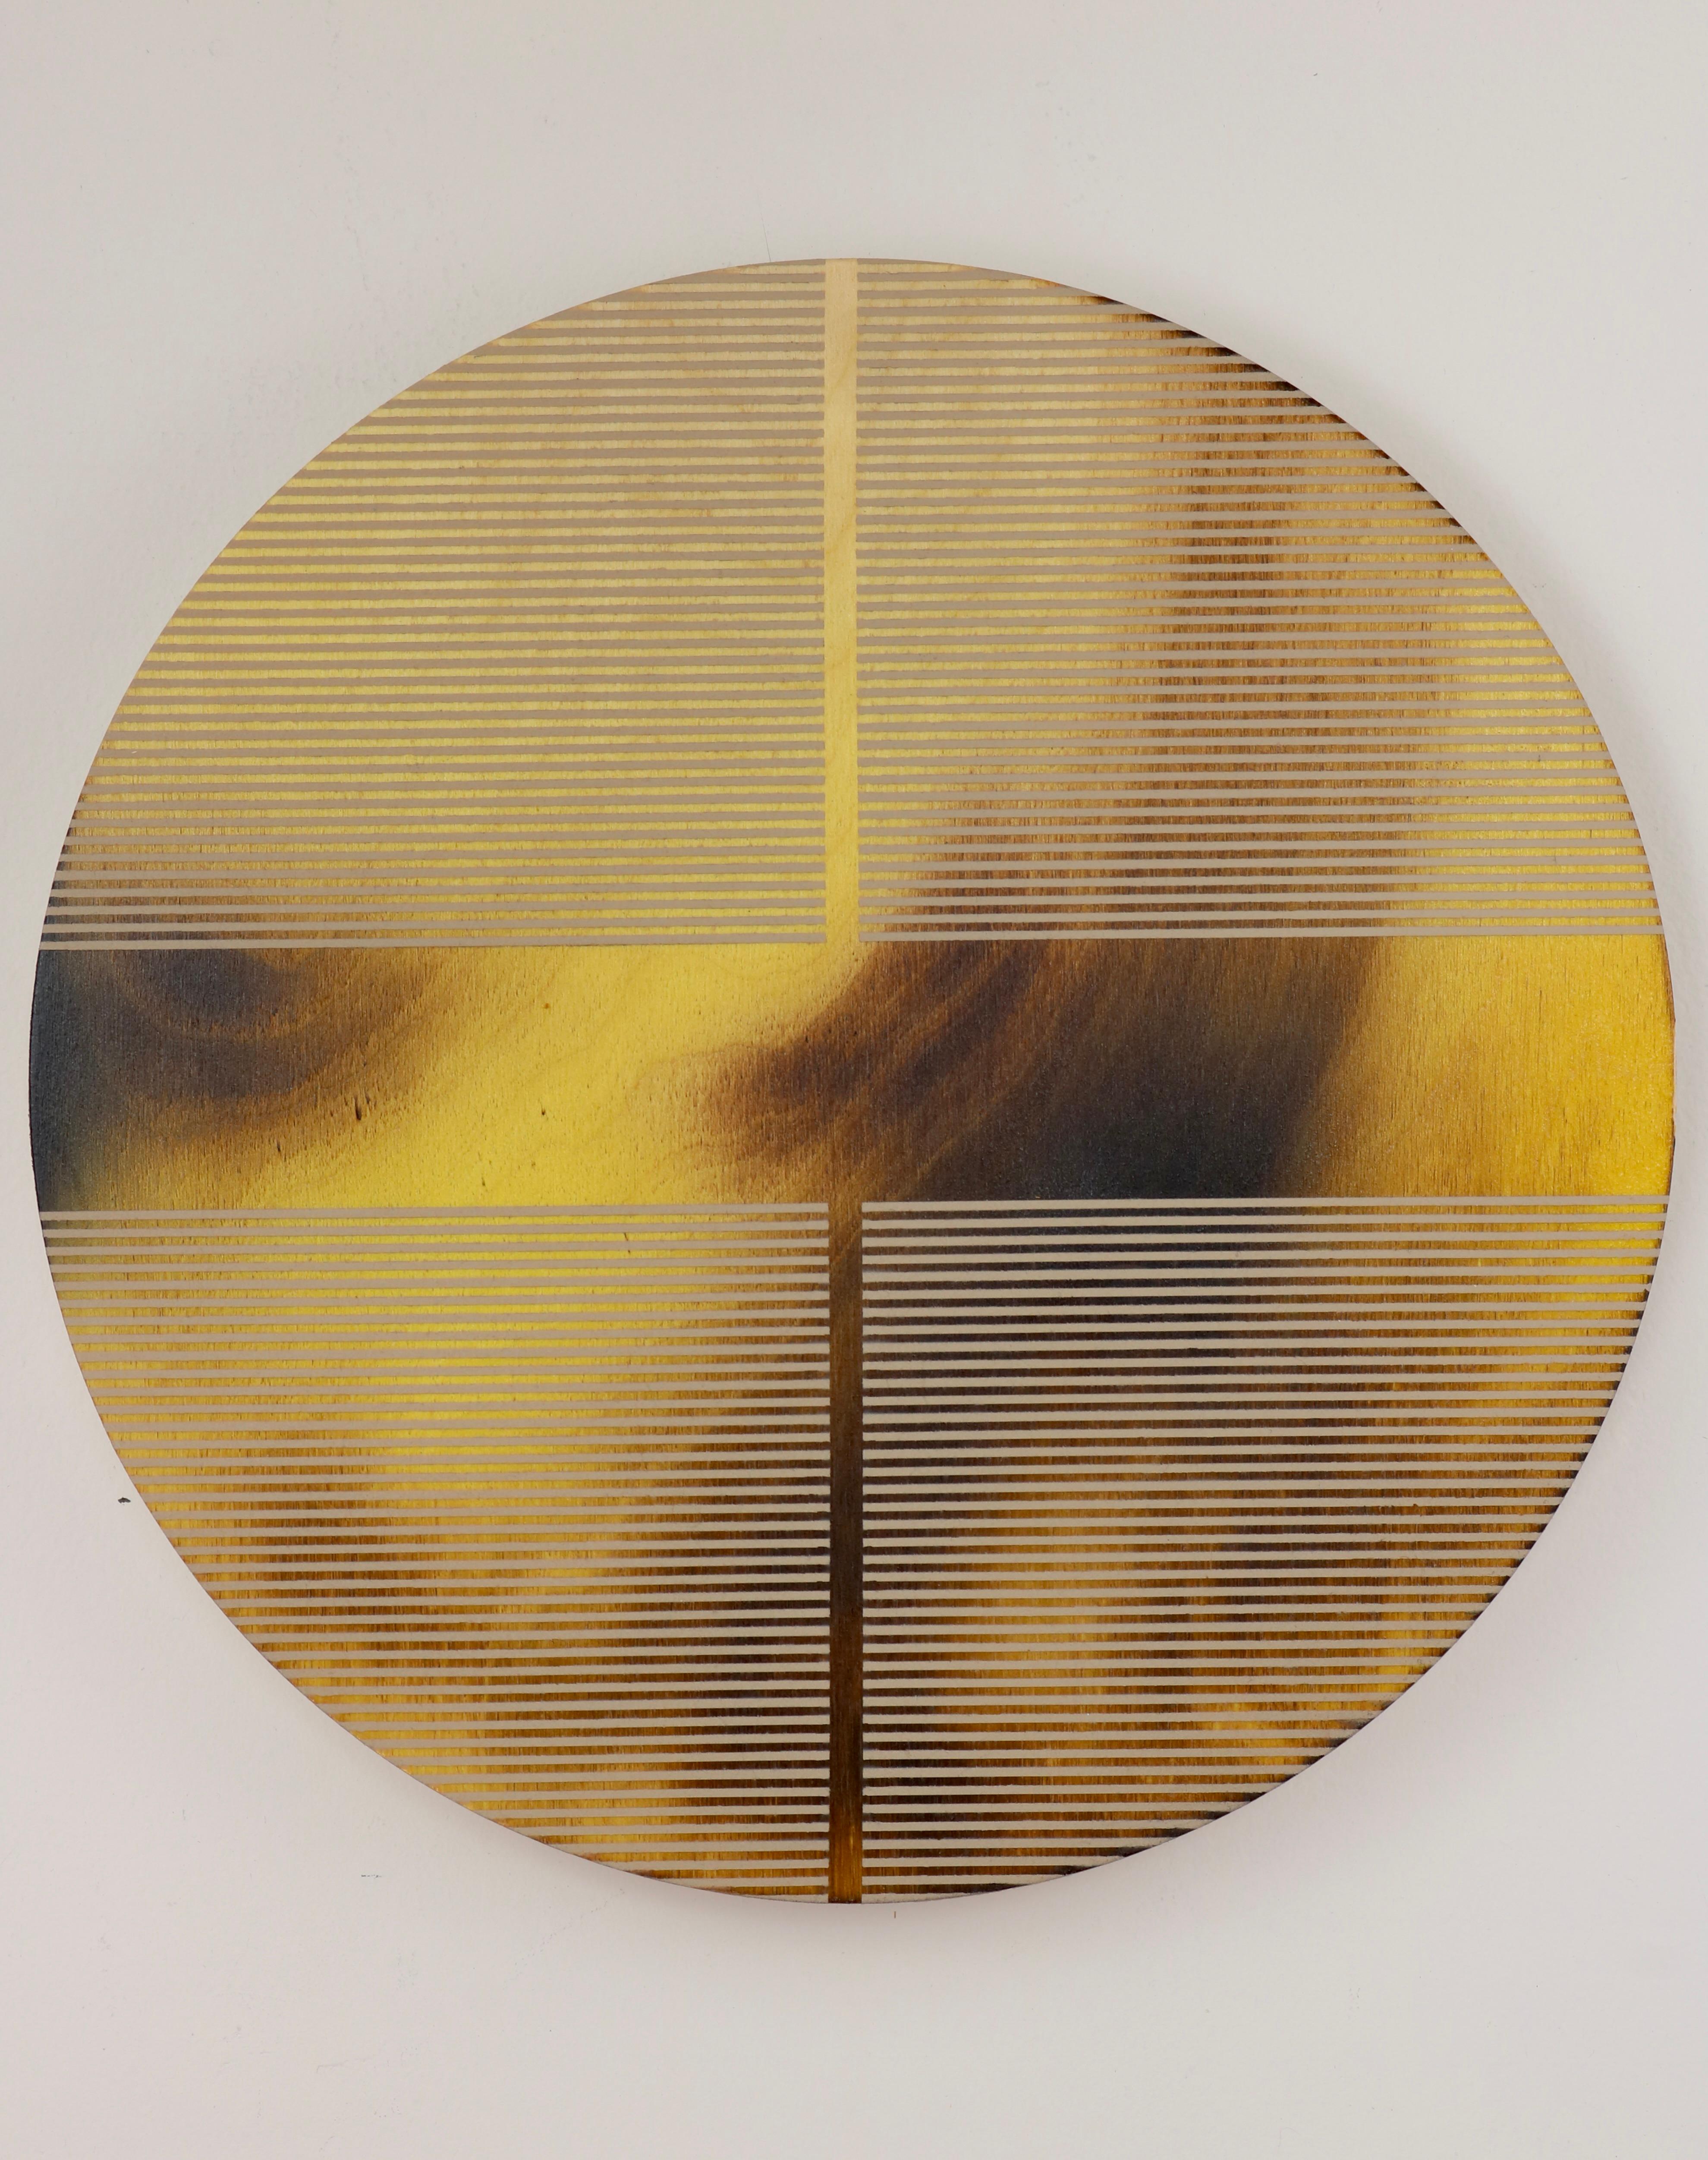 Banana skin yellow pill (minimaliste grid round painting on wood dopamine) - Mixed Media Art by Melisa Taylor Metzger